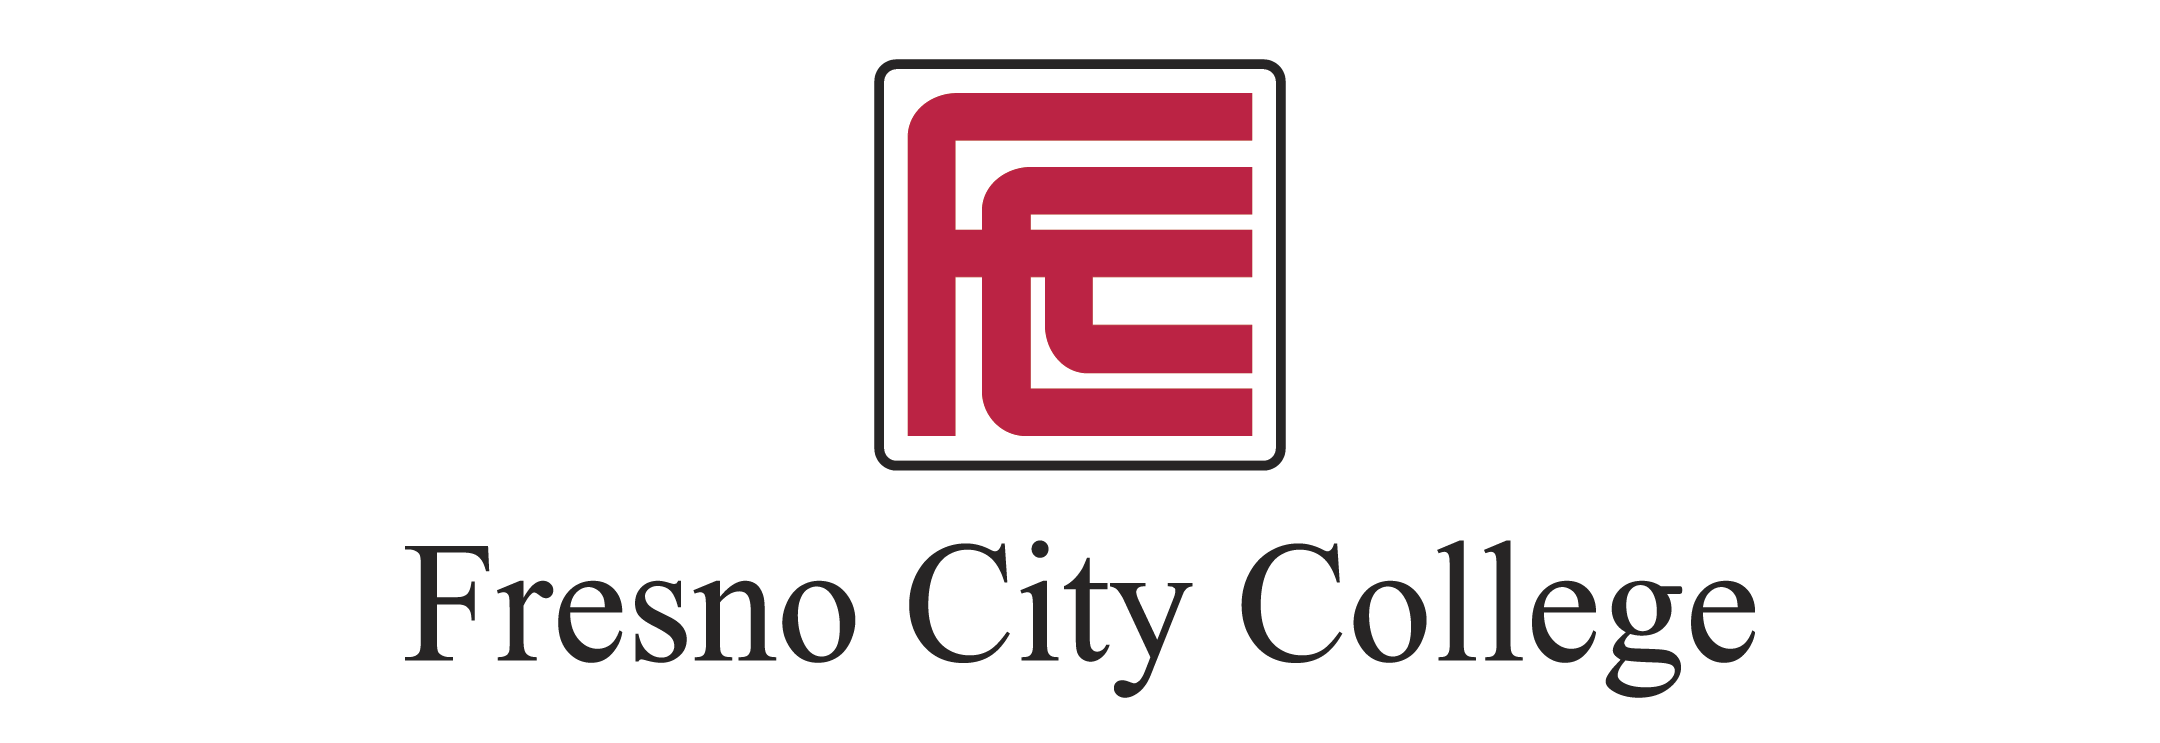 Fresno City College Wordmark Vertical K Pantone 199 C